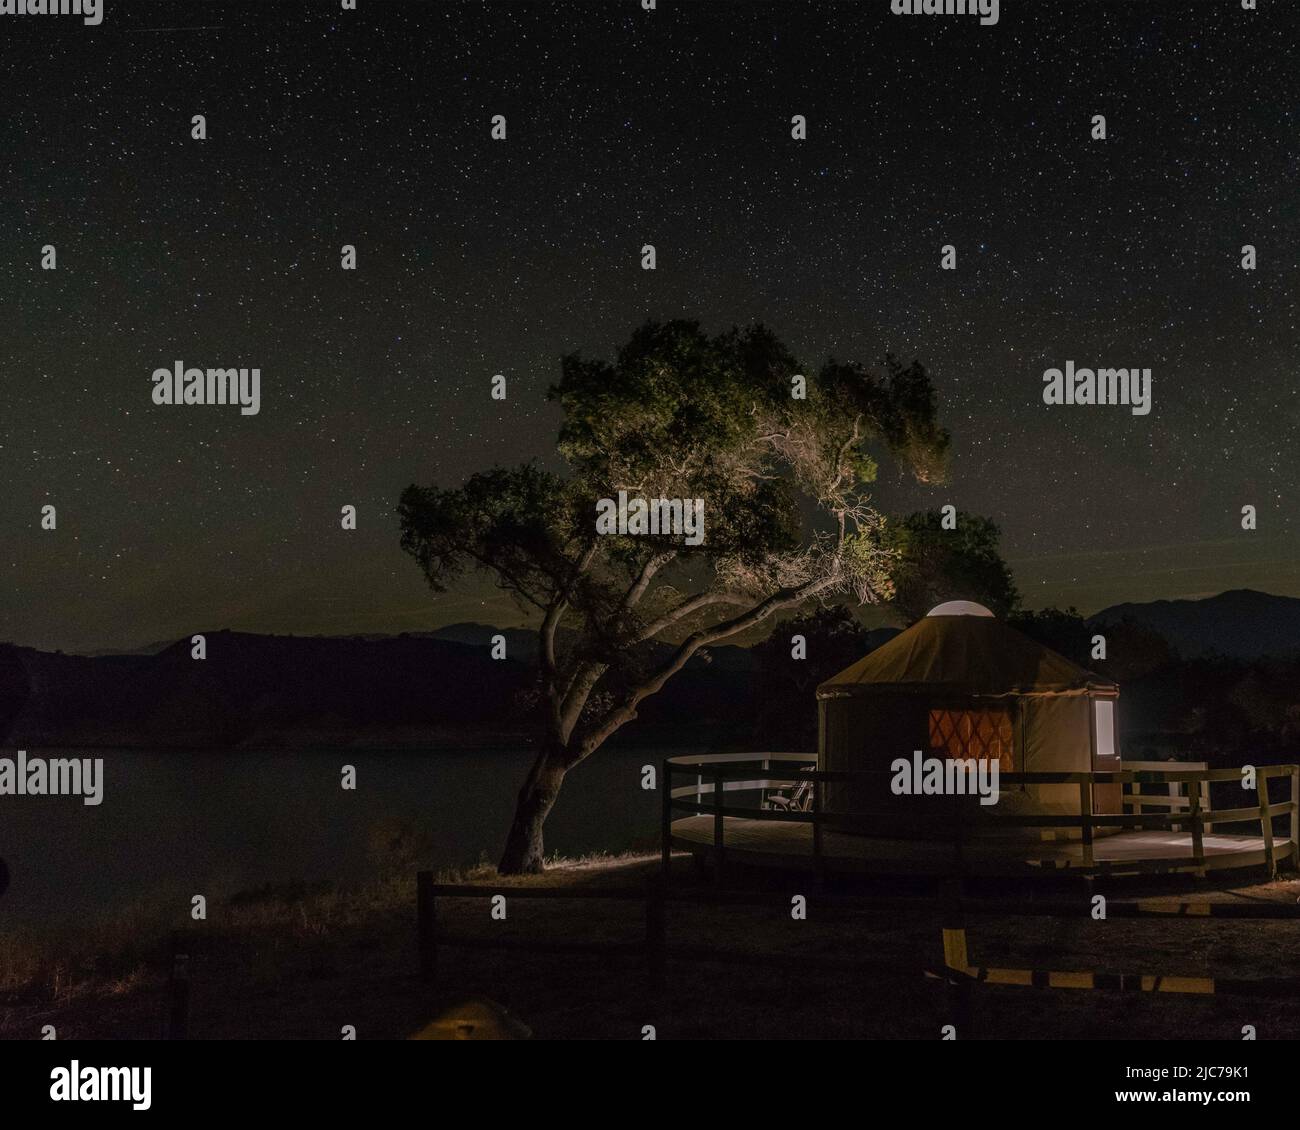 Exterior of a yurt at night under a starry sky, Lake Cachuma, Santa Barbara County, CA. Stock Photo